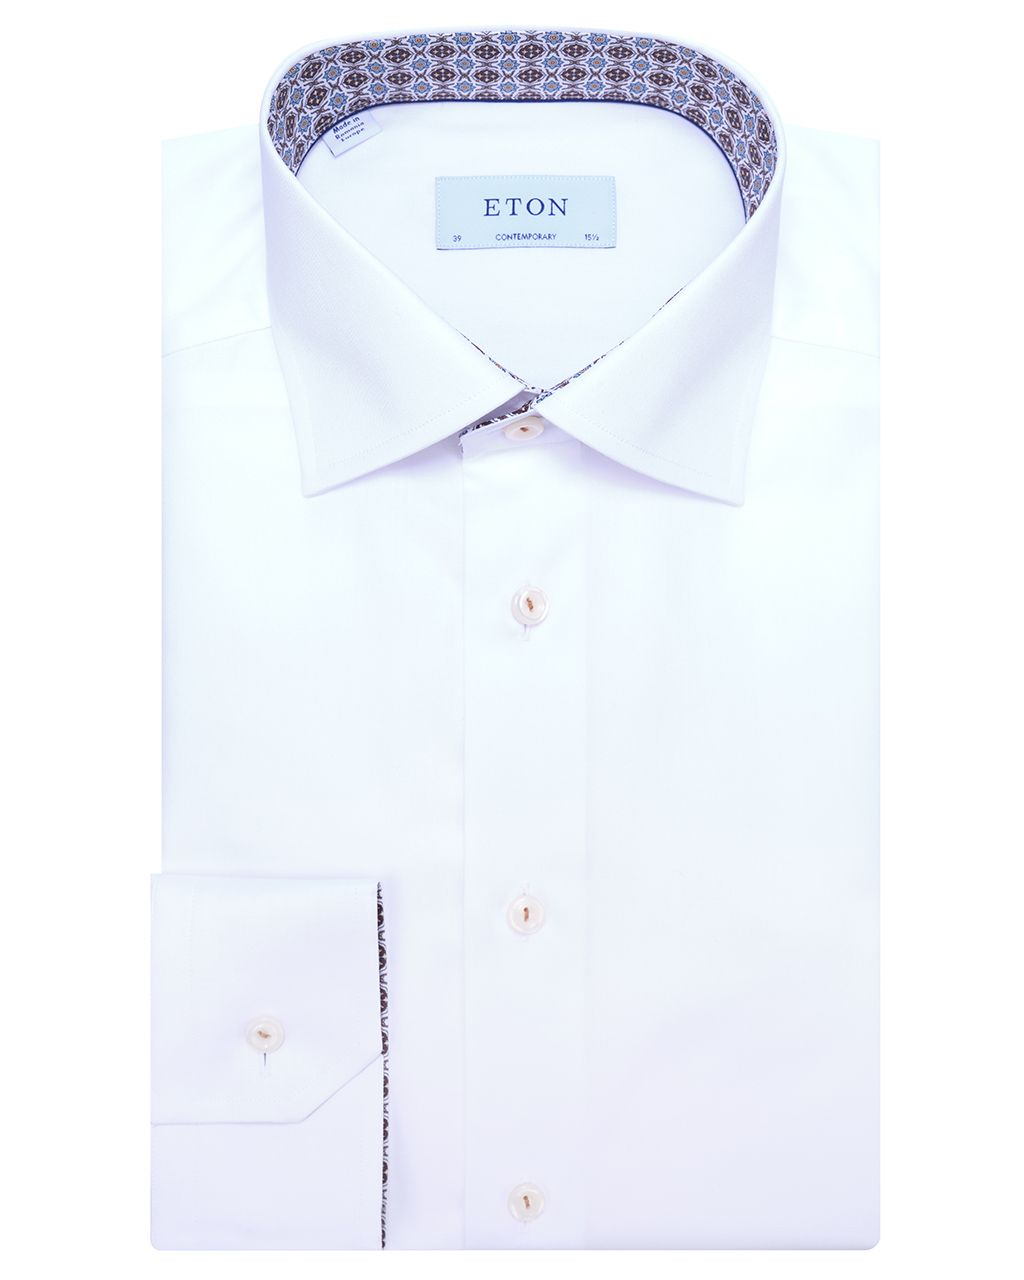 ETON Overhemd LM Wit 078823-001-37/38